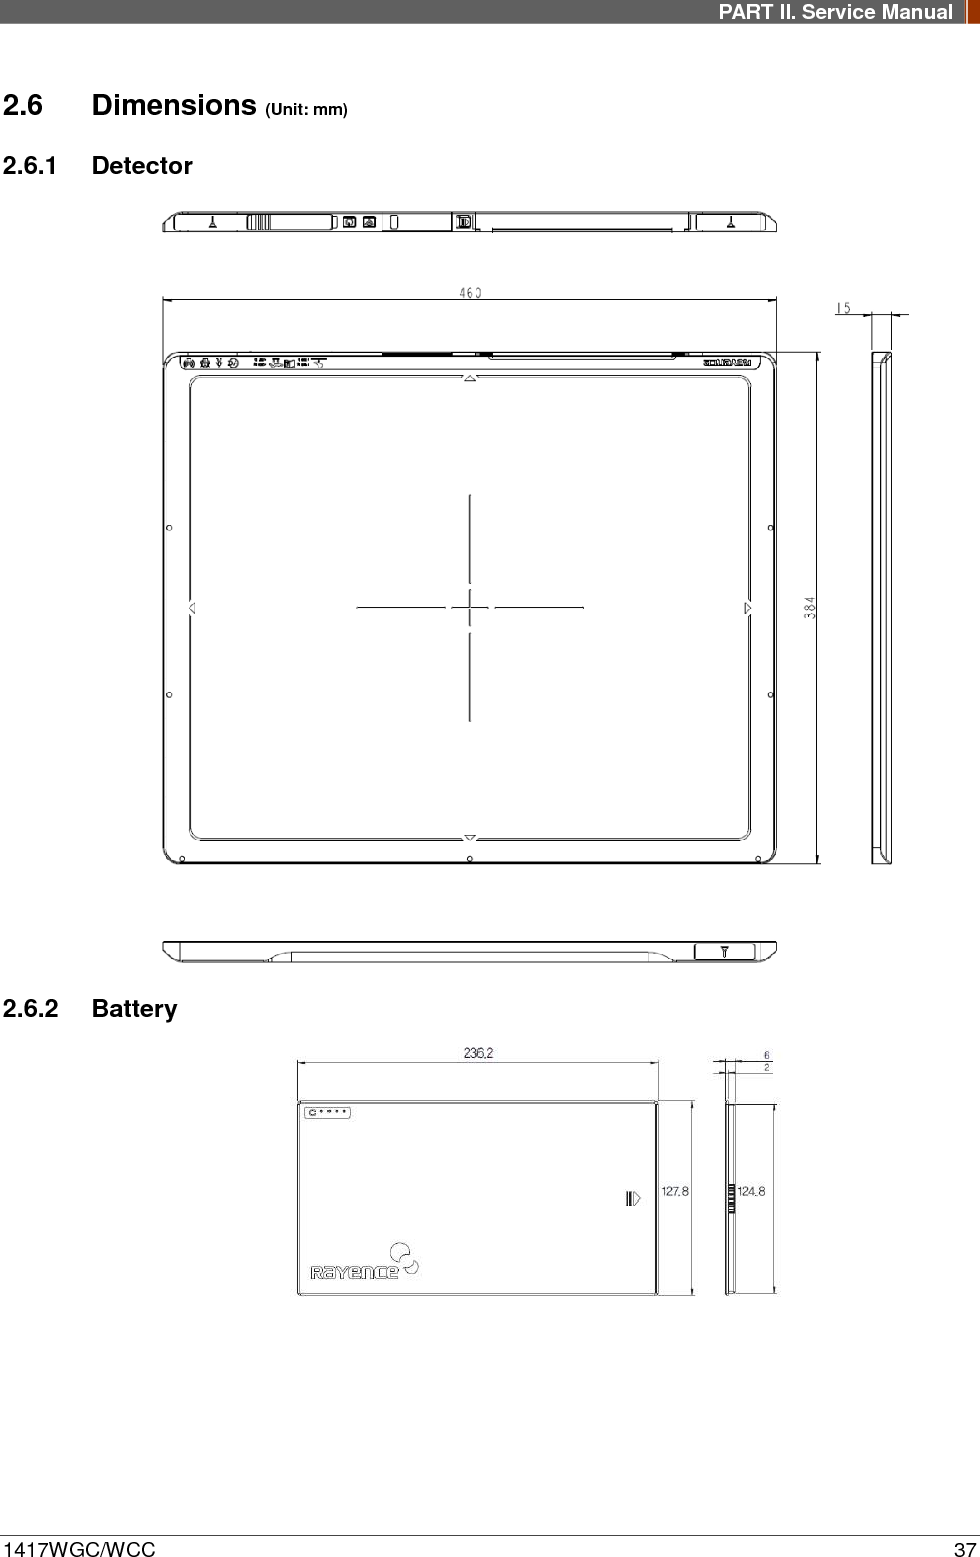 PART II. Service Manual  1417WGC/WCC 37 2.6 Dimensions (Unit: mm)  2.6.1 Detector              2.6.2 Battery  